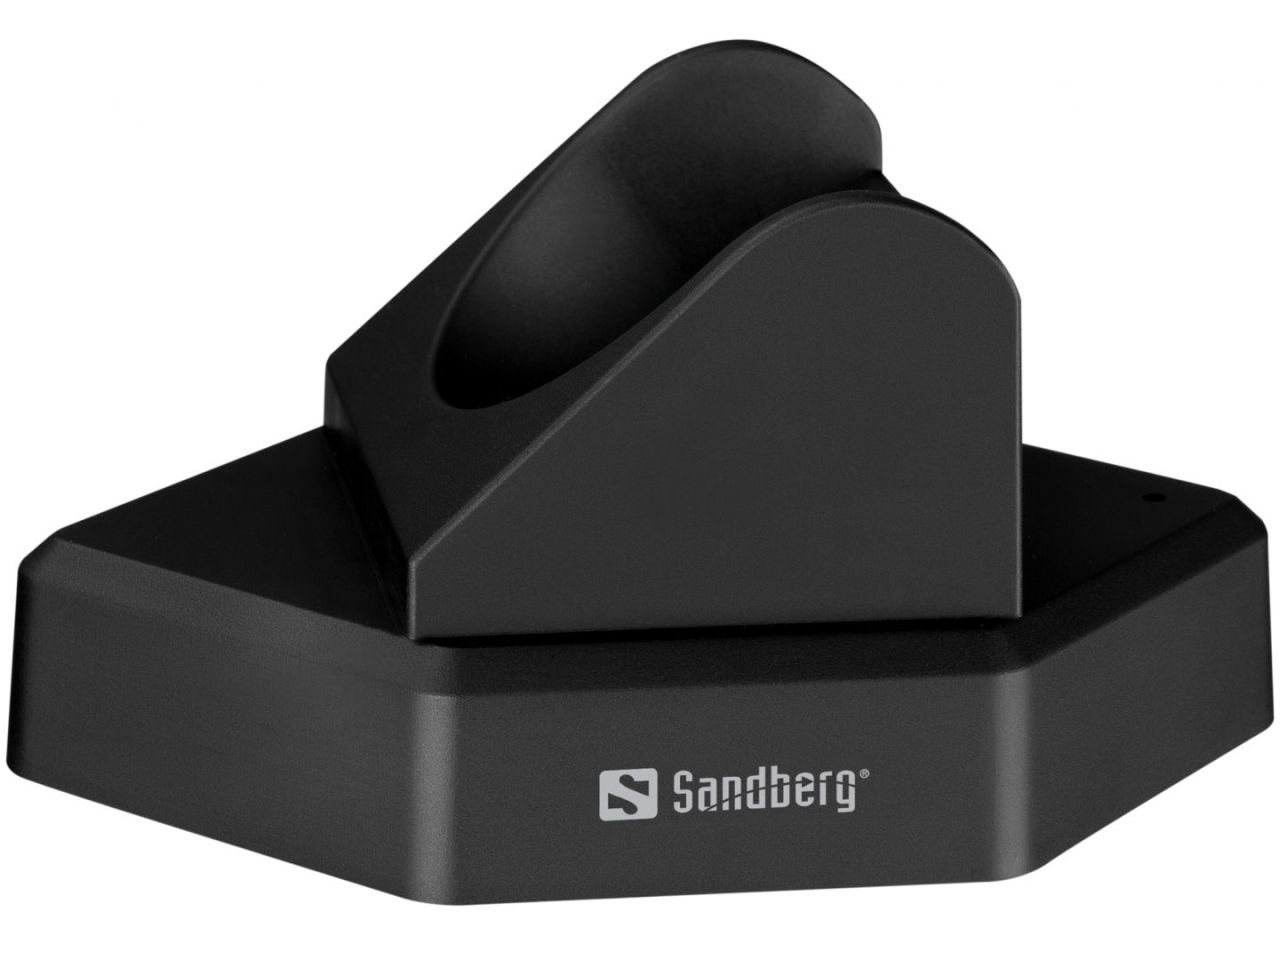 Sandberg Bluetooth Office Headset Pro+ Black